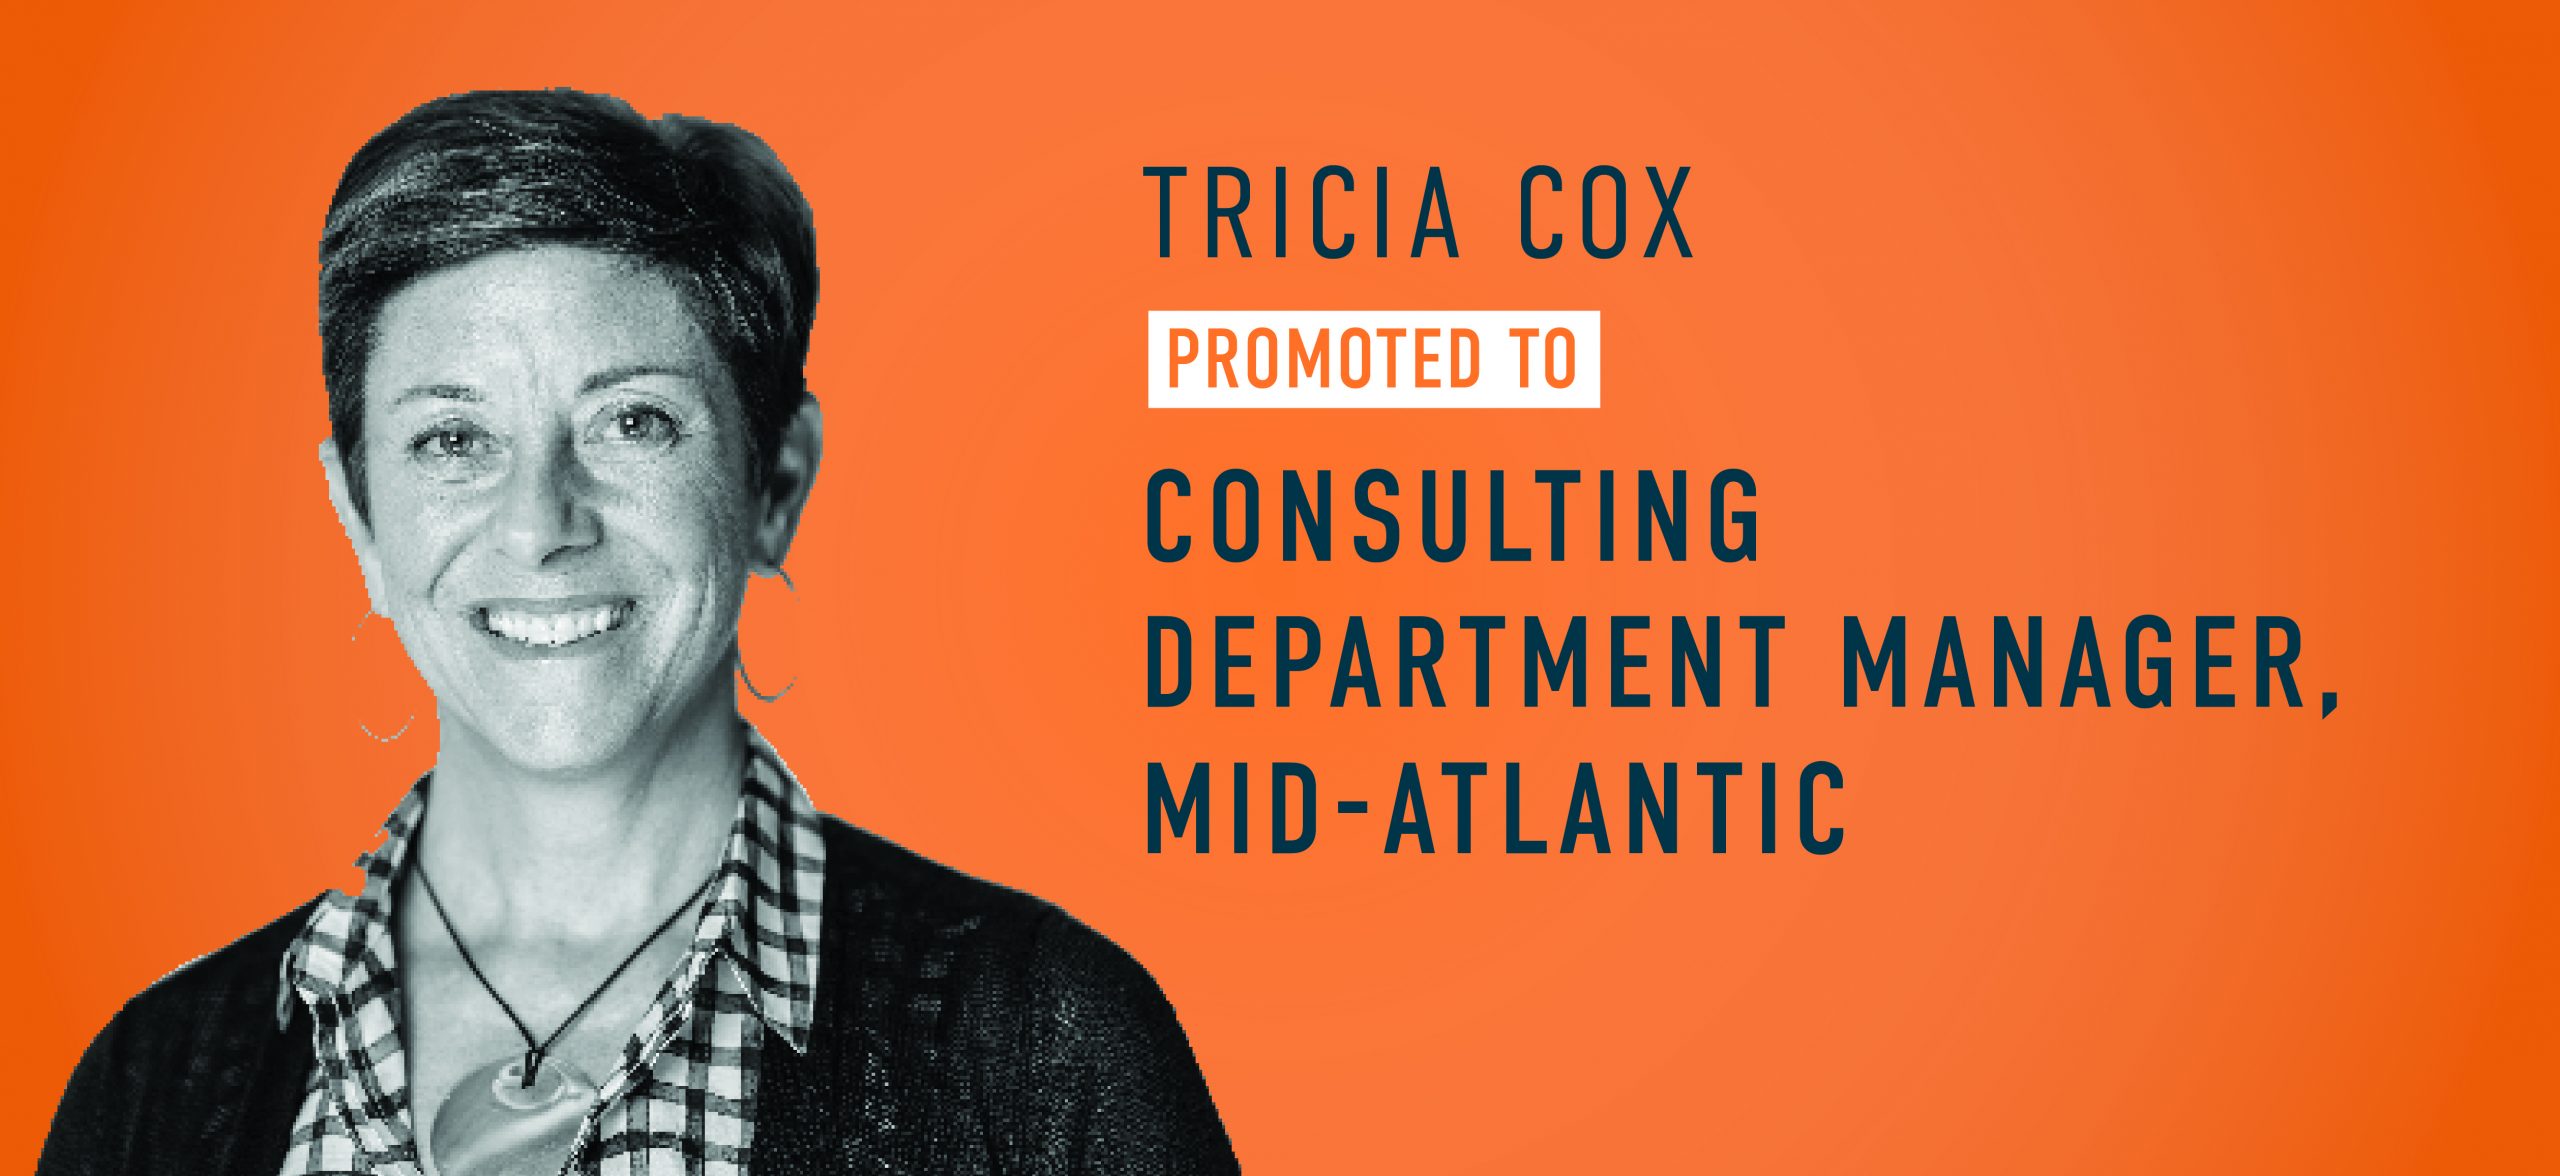 071522 Tricia Cox Promotion-03